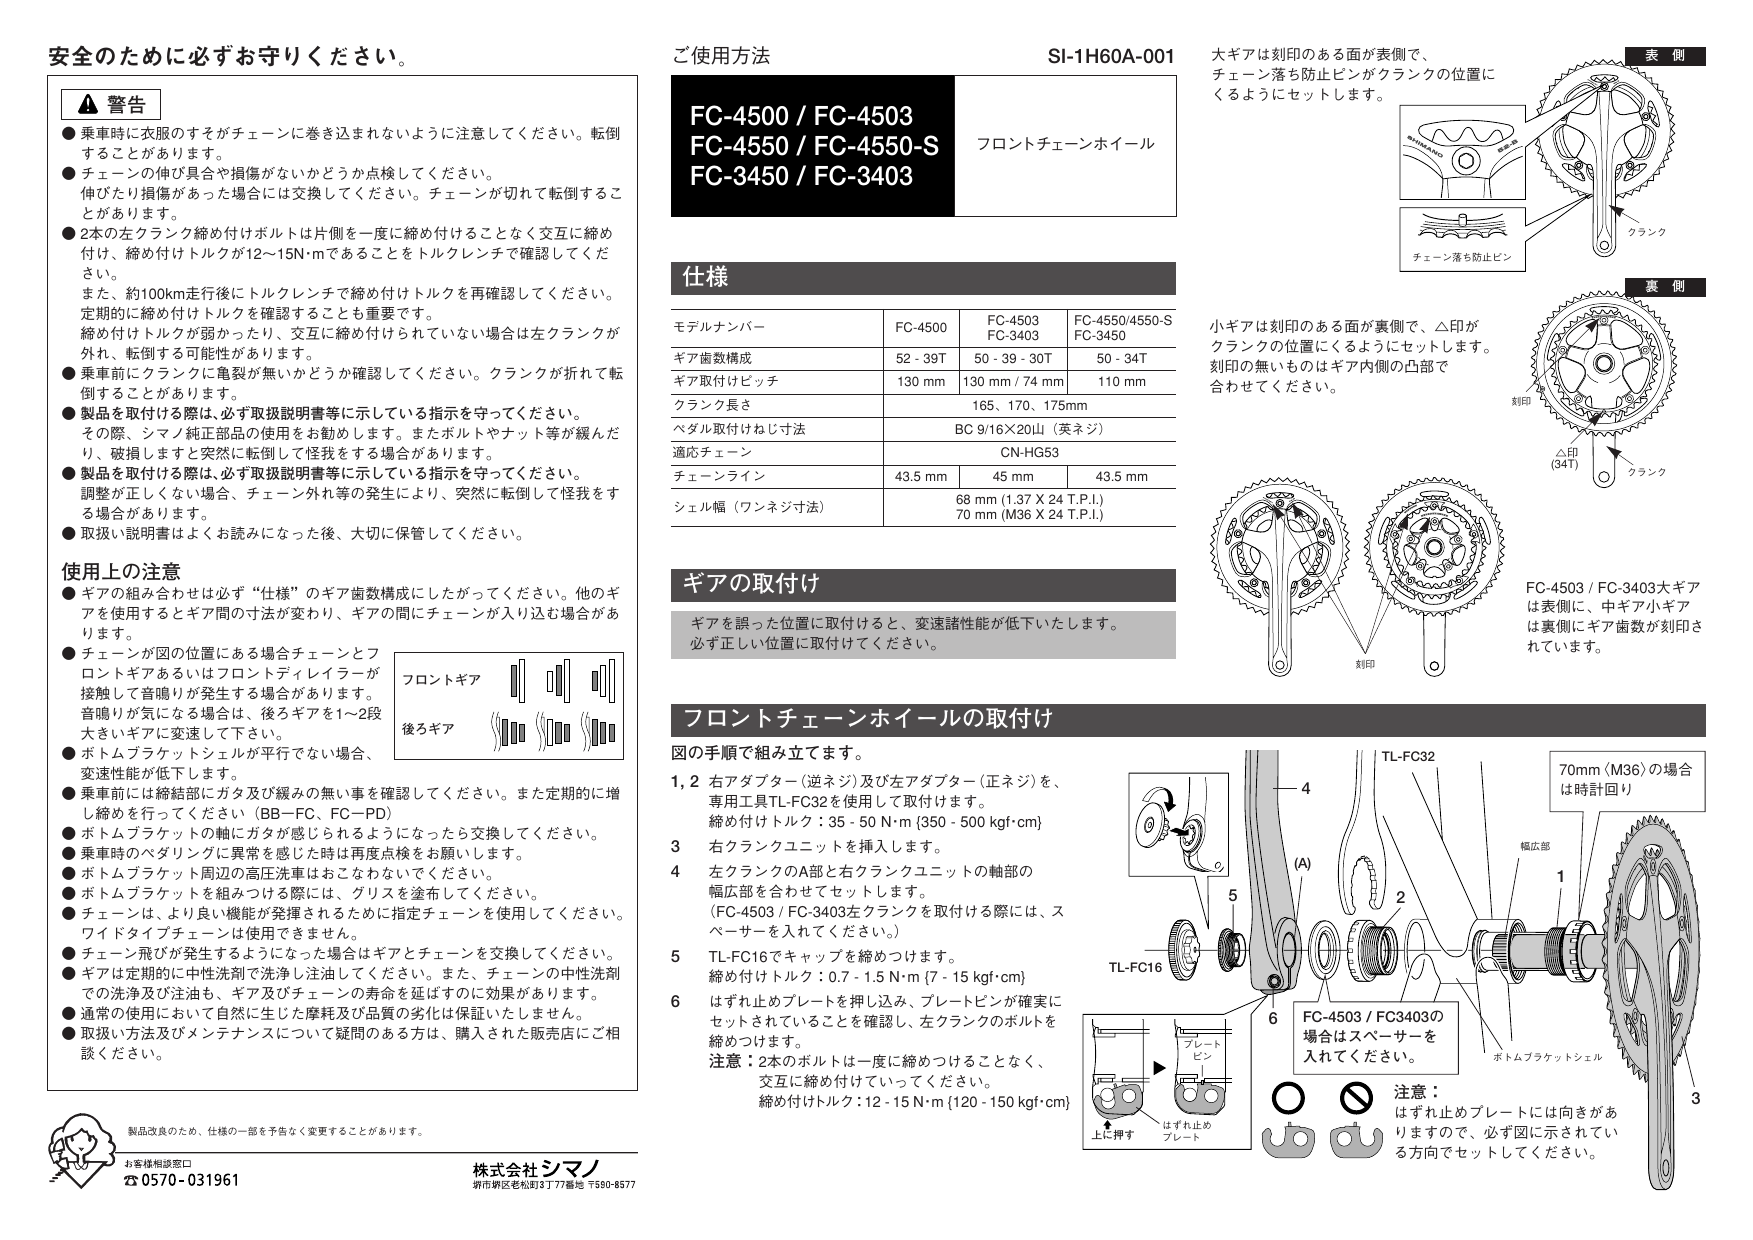 Shimano FC-3450 クランクセット ユーザーマニュアル | Manualzz